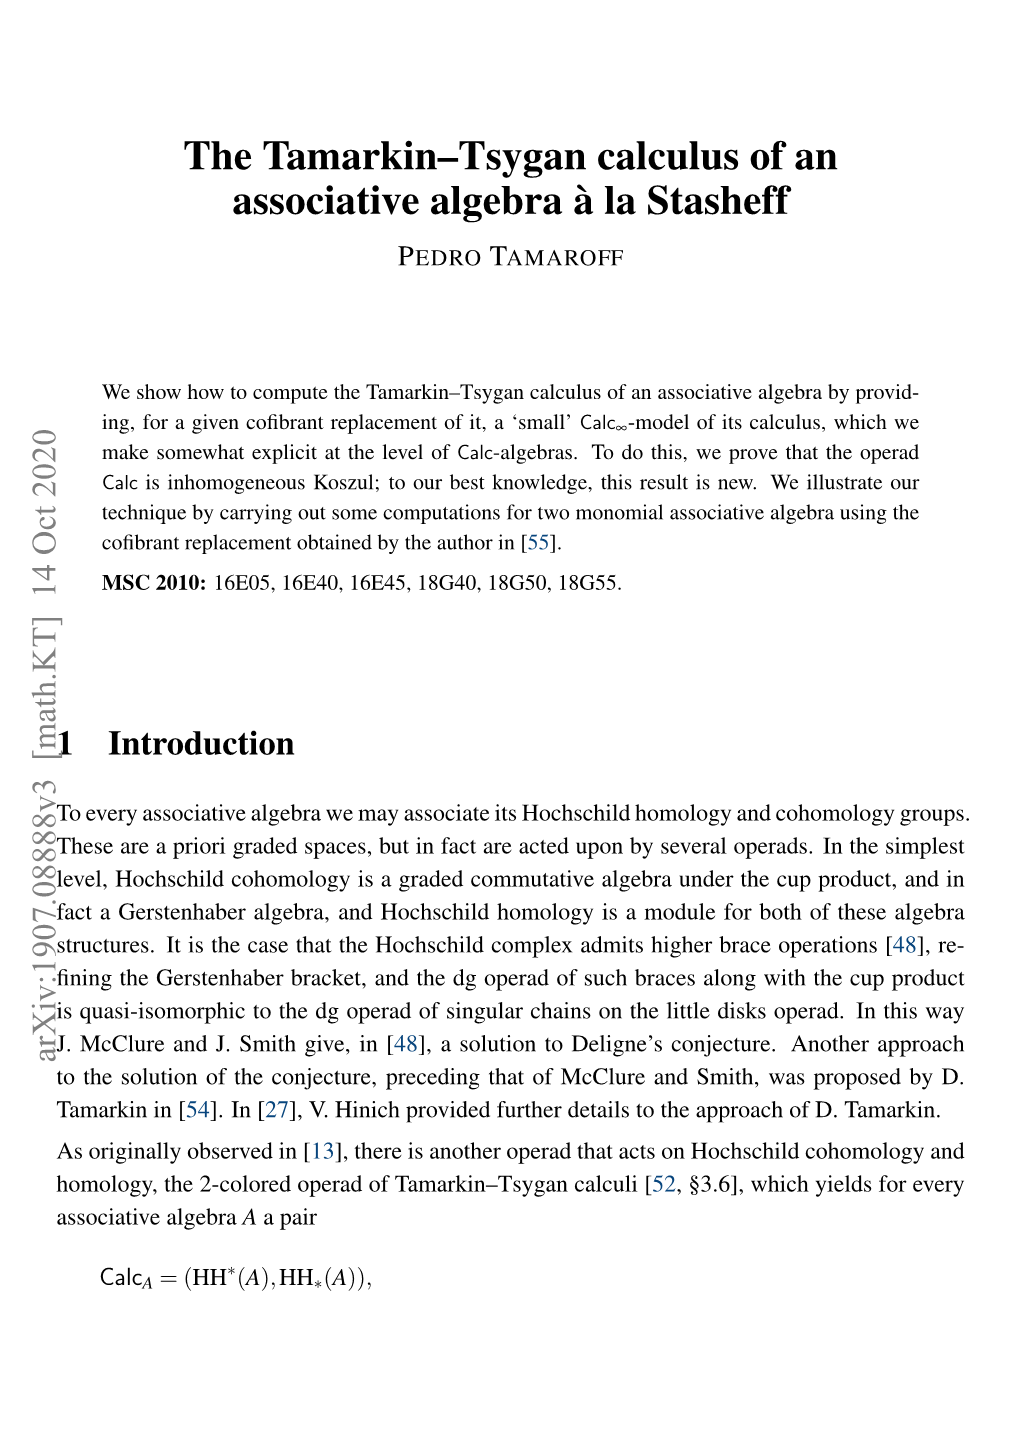 The Tamarkin–Tsygan Calculus of an Associative Algebra À La Stasheff